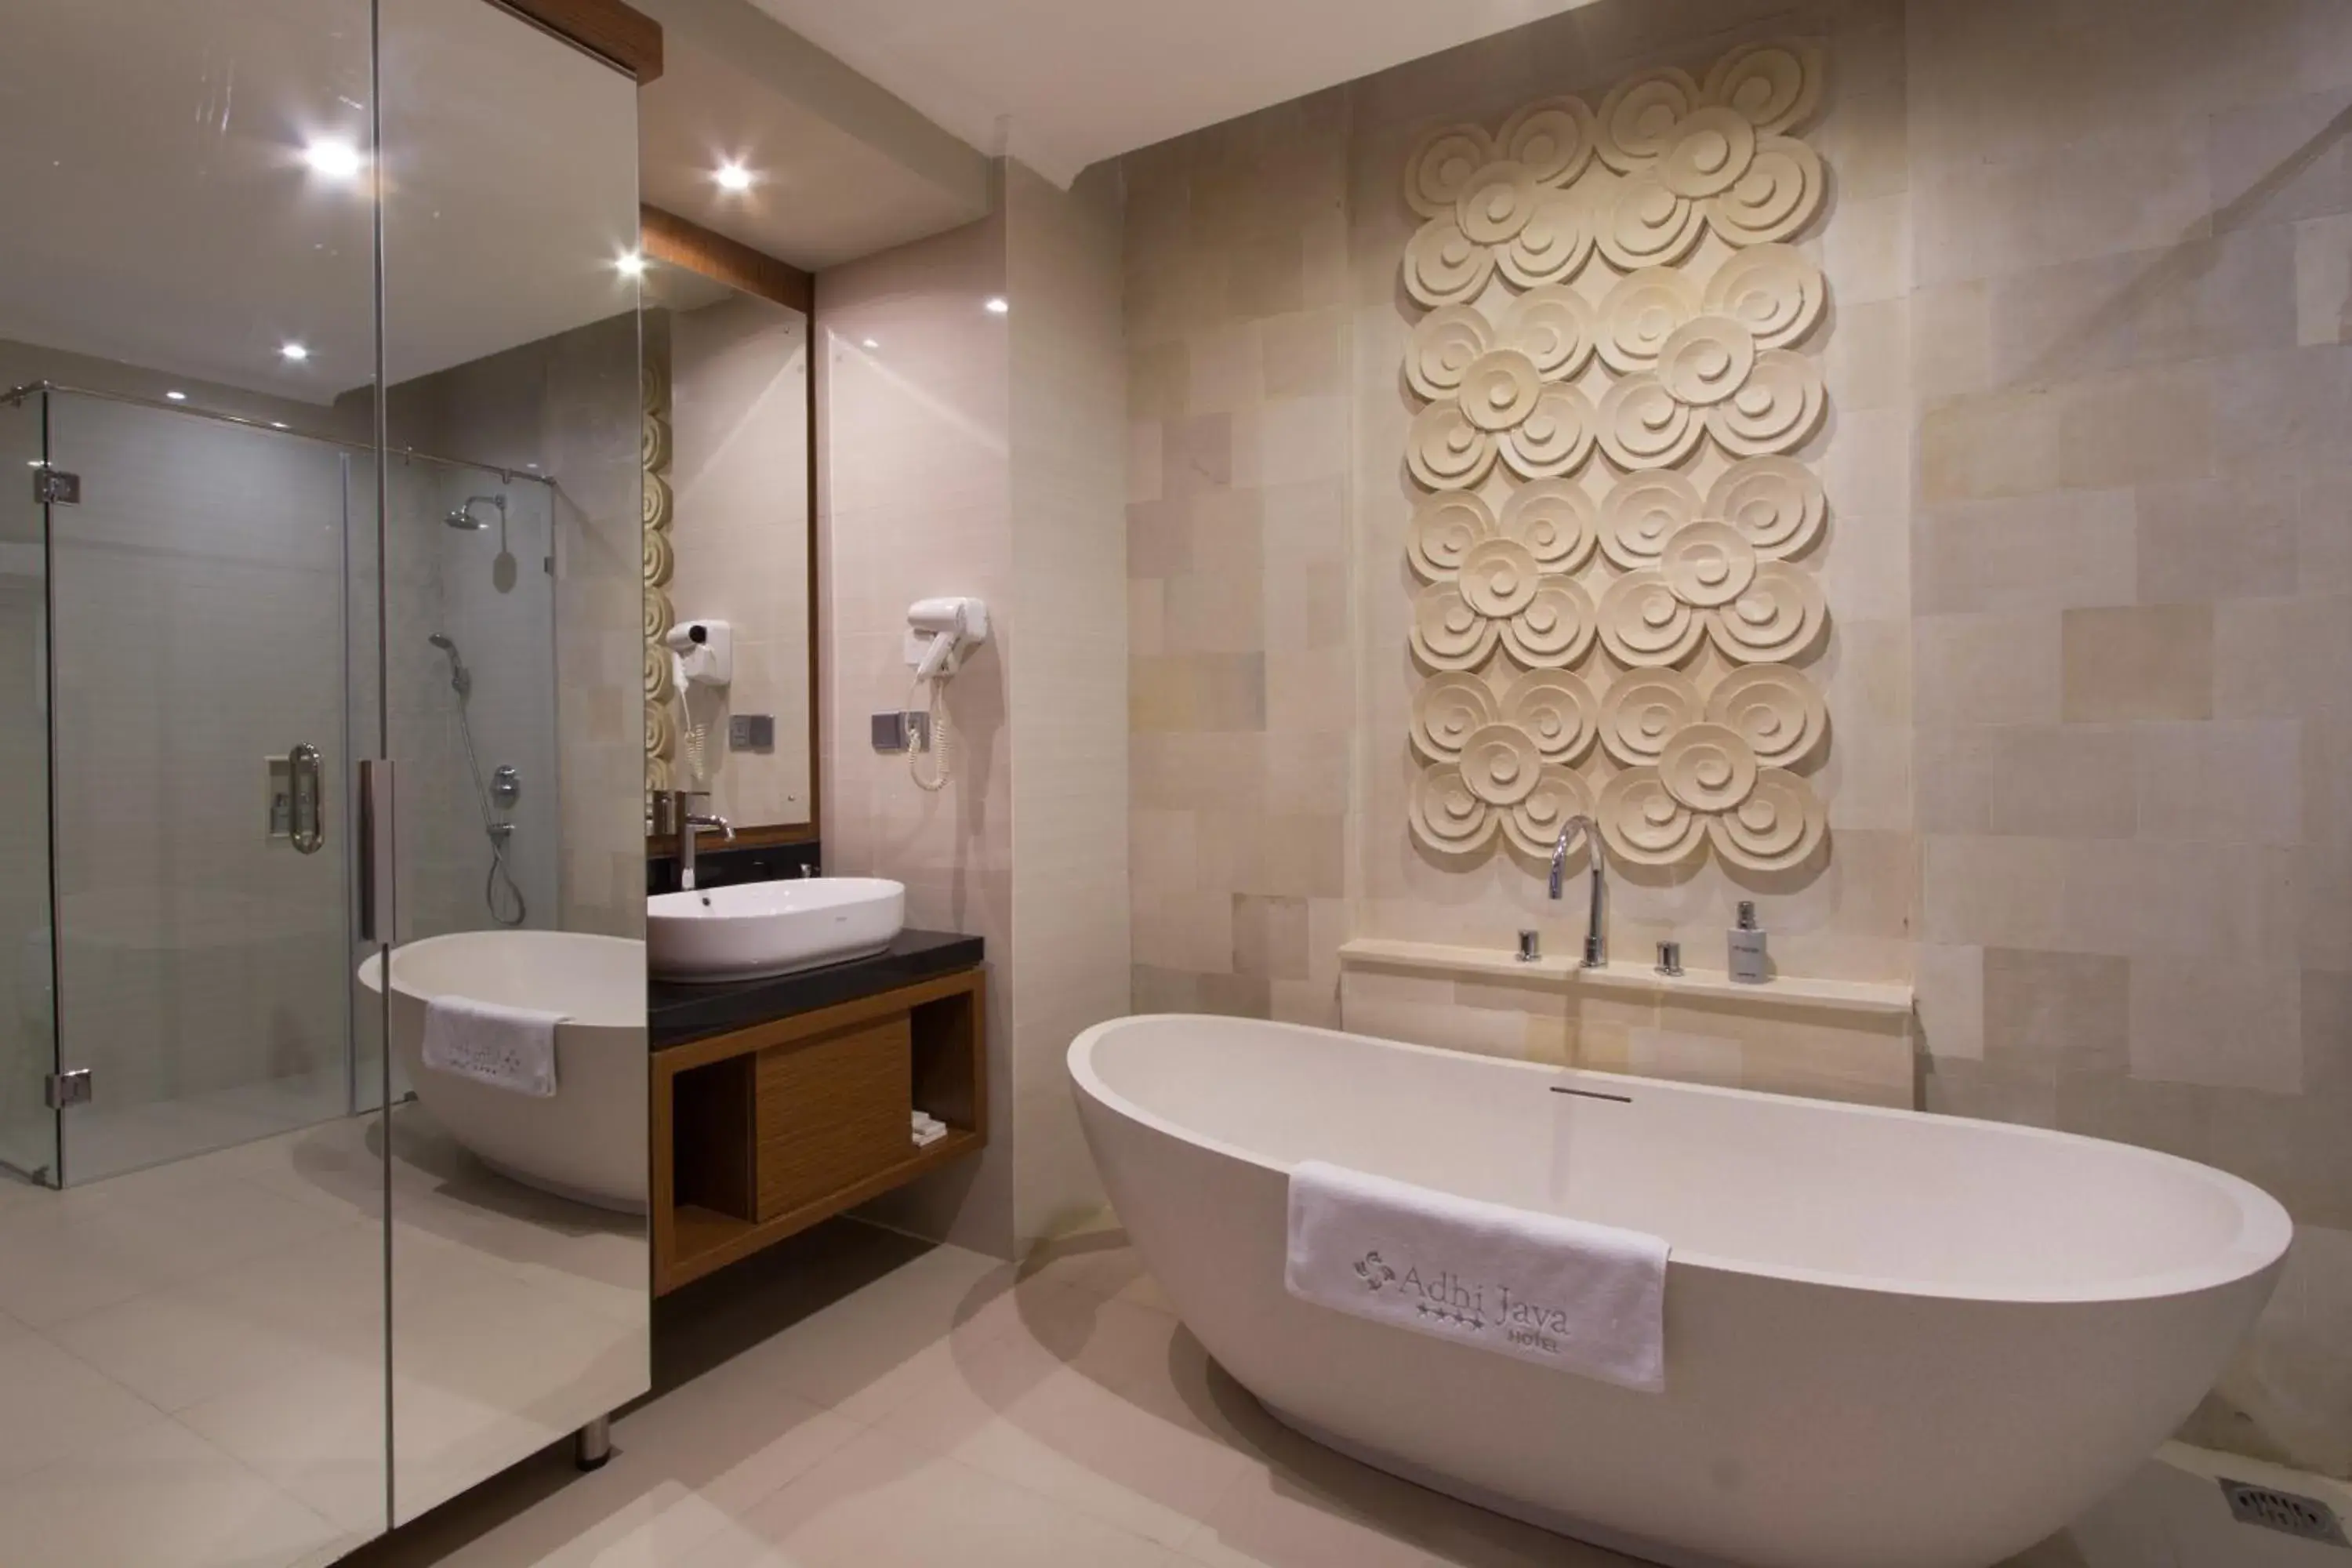 Shower, Bathroom in Adhi Jaya Hotel